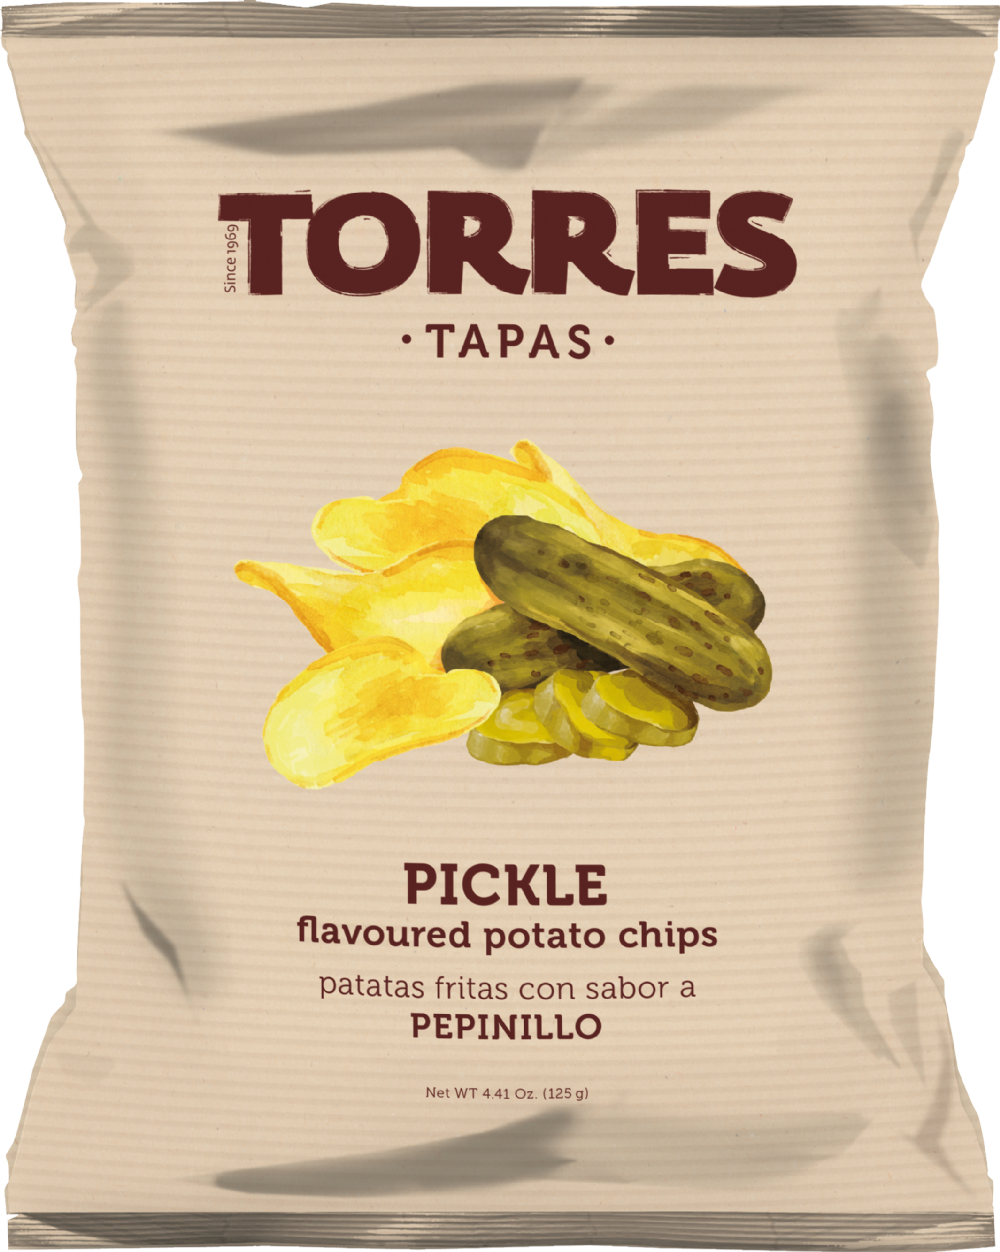 TORRES Tapas Pickle Flavoured Potato Chips 125g